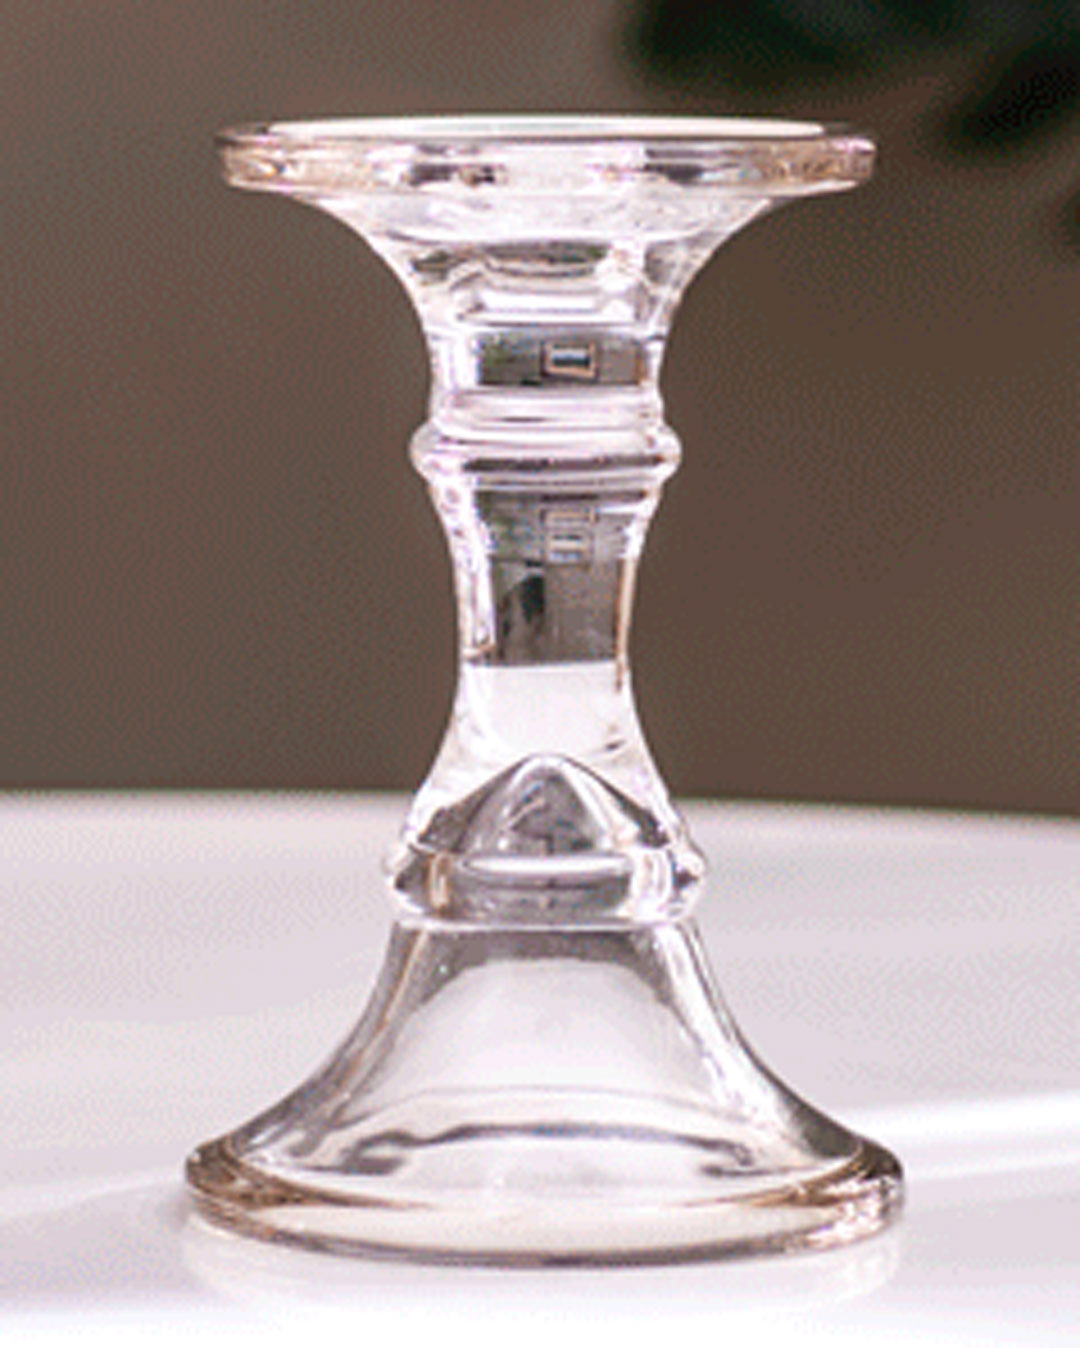 Sleek and Stylish Glass Candle Stand - Small